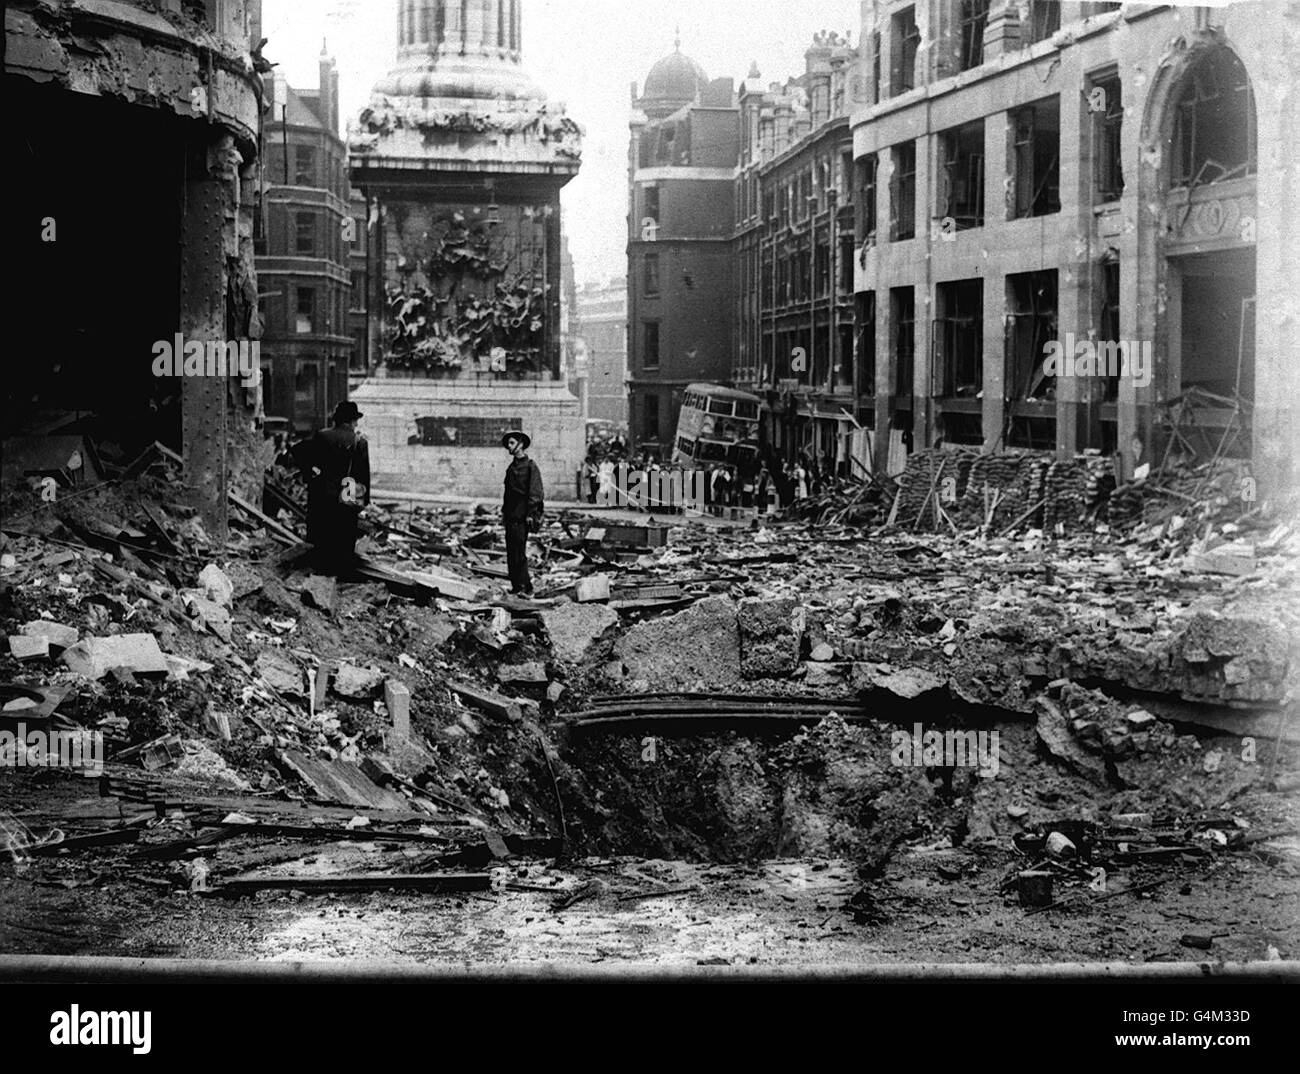 Second World War/Bomb damage Stock Photo